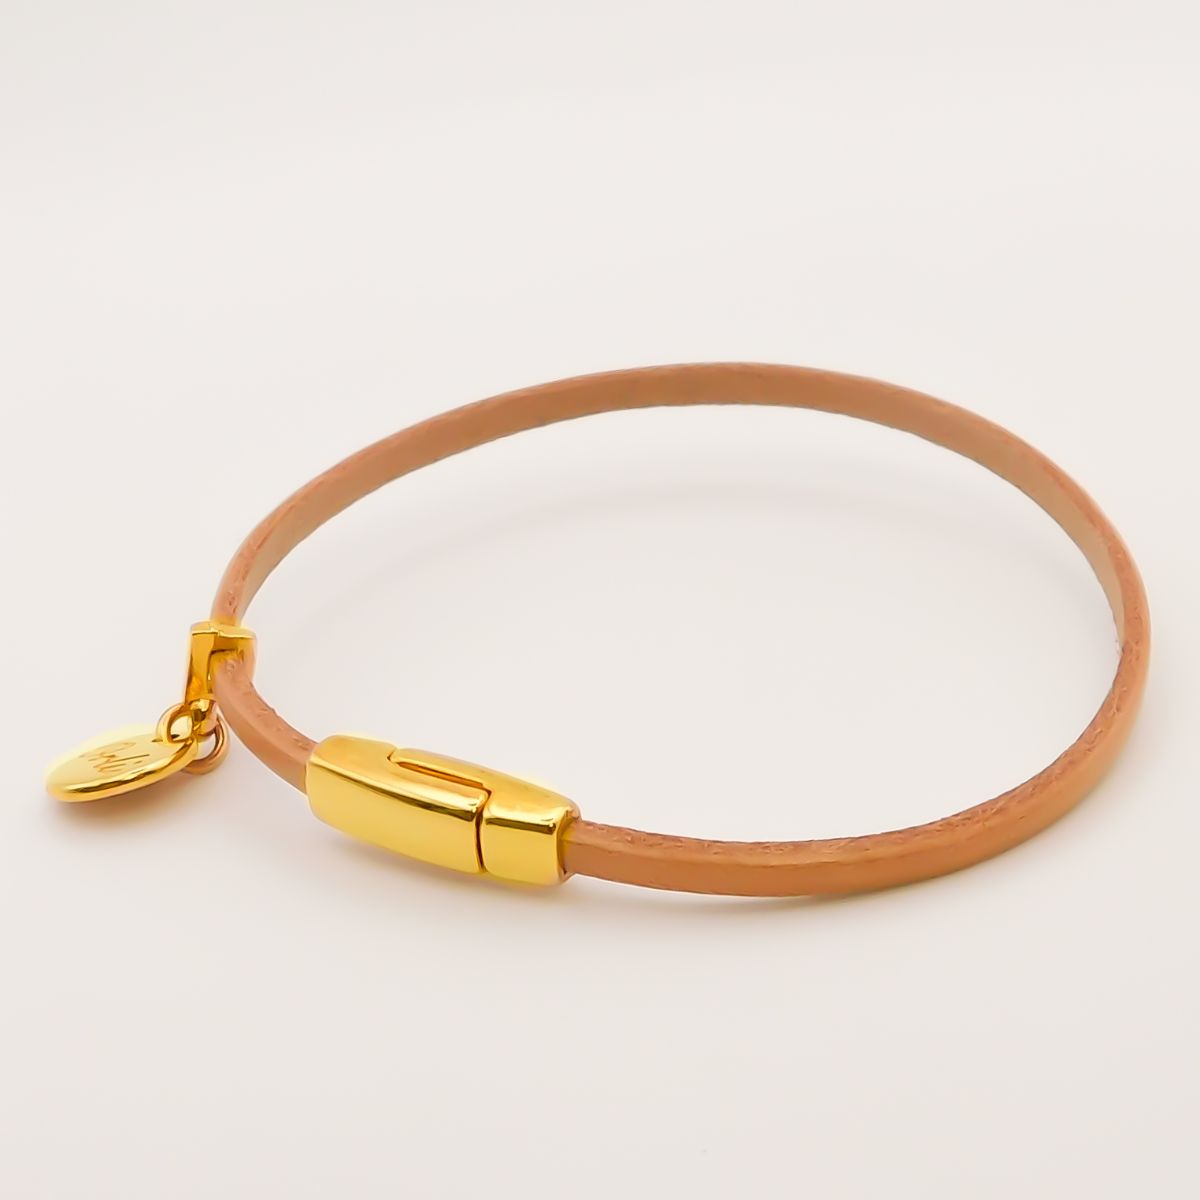 Gold Aum Men's Leather Bracelet for Men - Aumkaara Bracelet JewelsLane